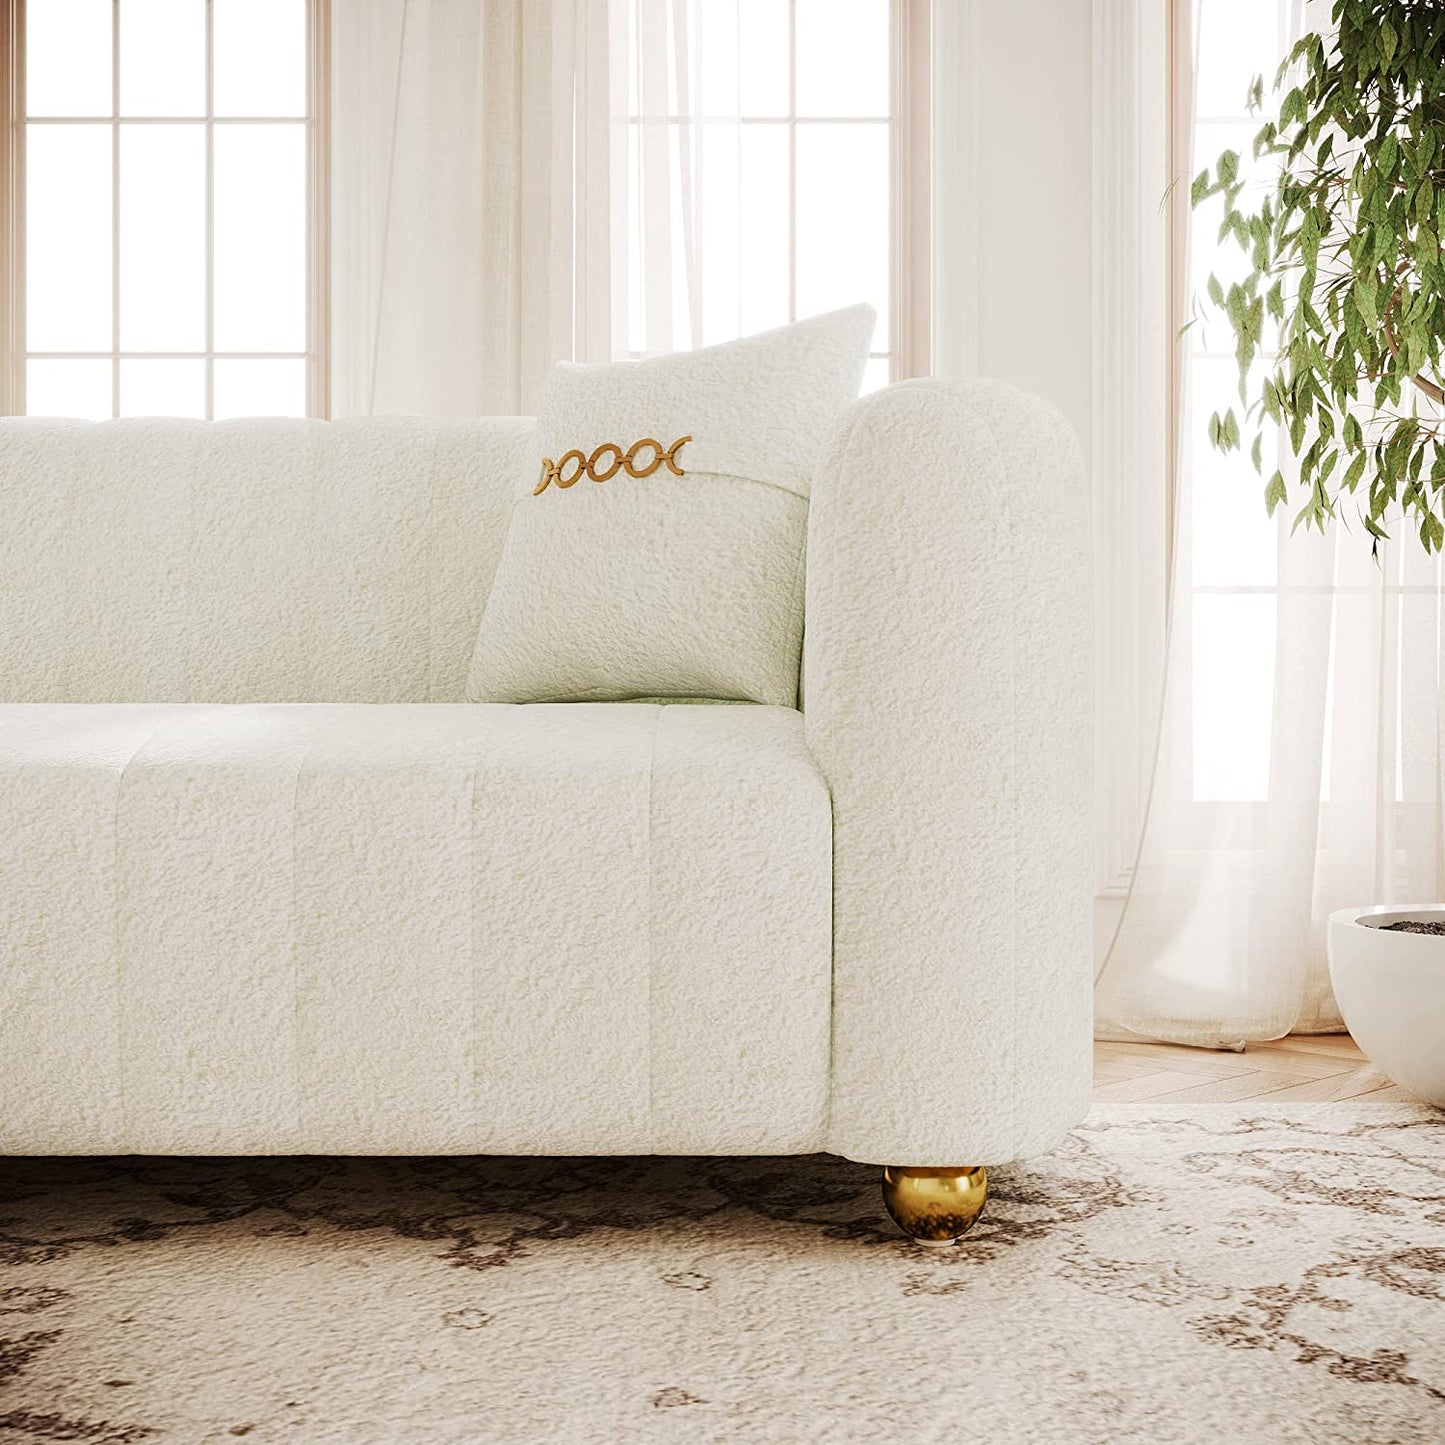 Zeefu 3 Seater Fabric Premium Sofa For Living Room